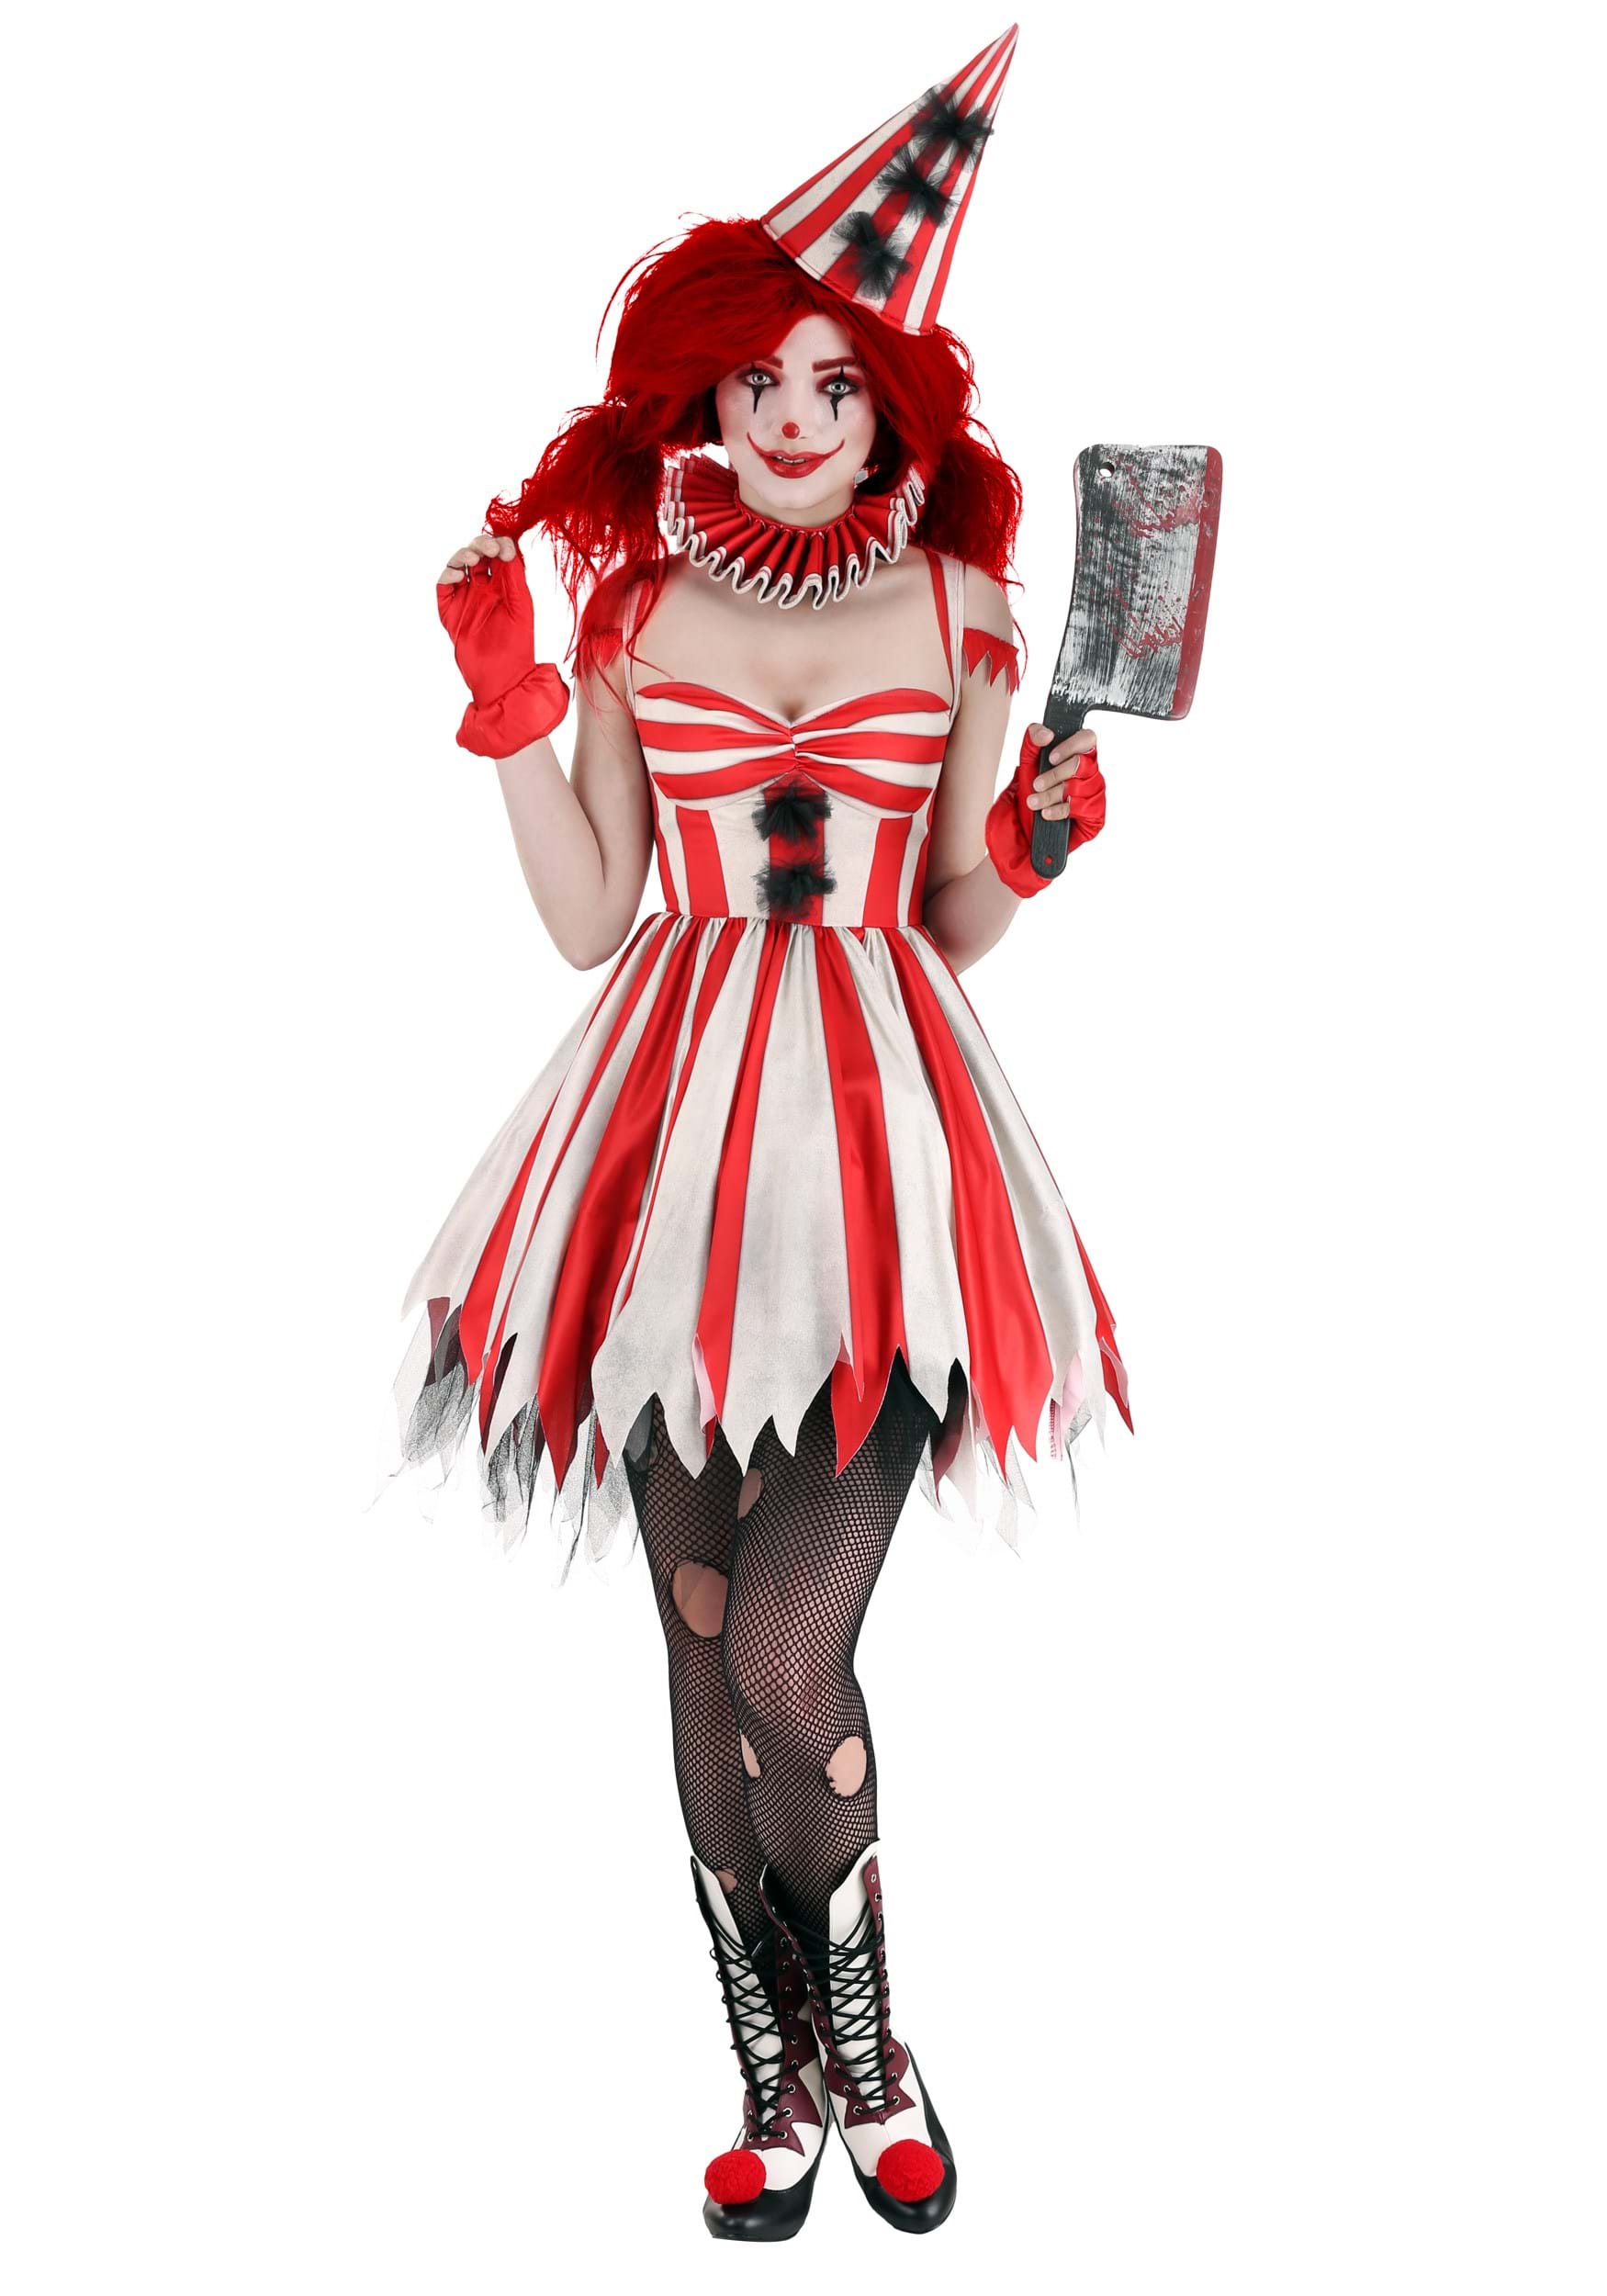 Sinister Women's Circus Clown Costume